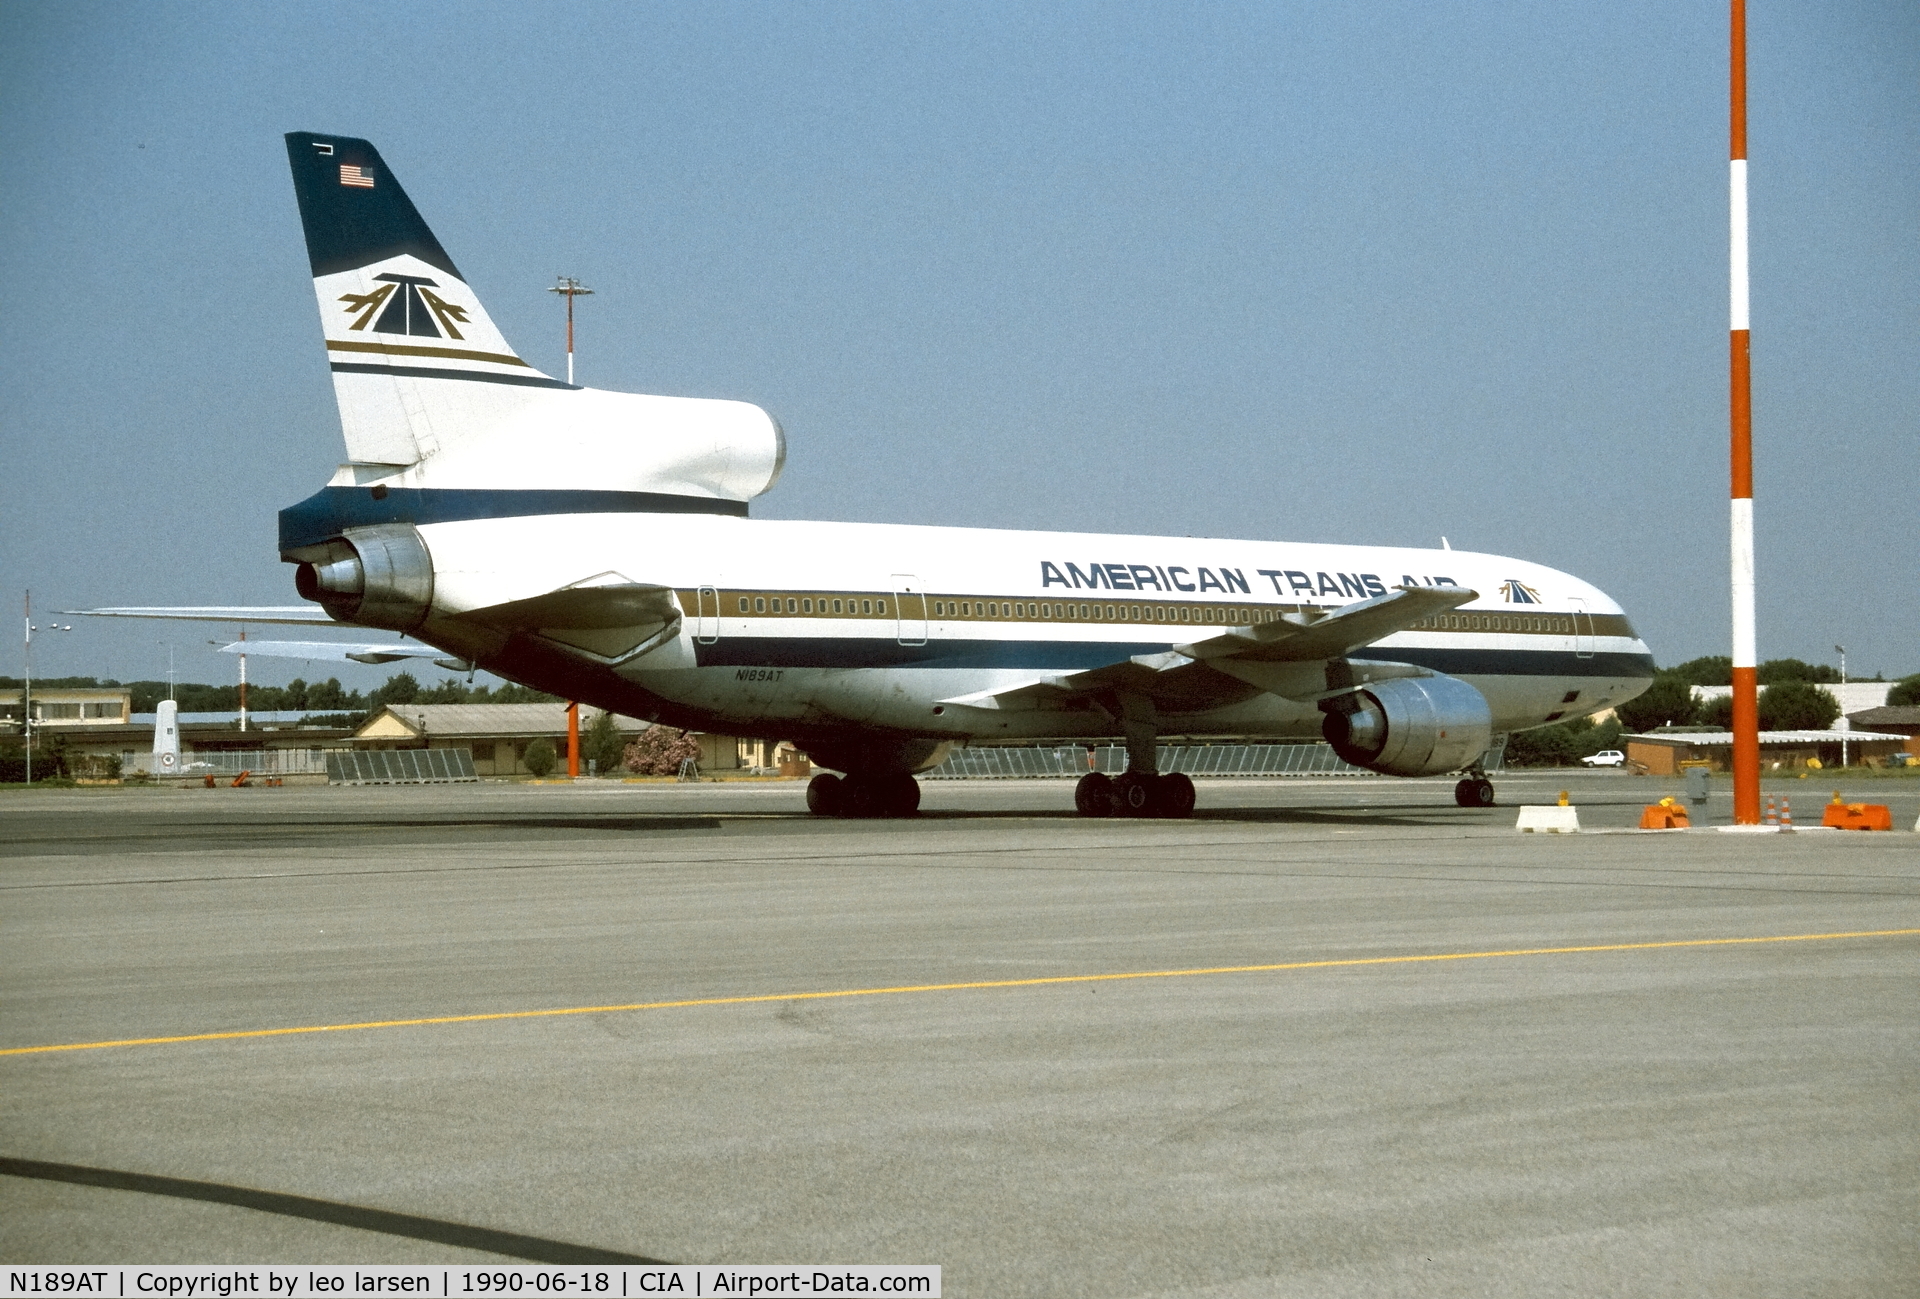 N189AT, 1974 Lockheed L-1011-385-1 TriStar 1 C/N 193C-1081, Rom Ciampino 18.6.90